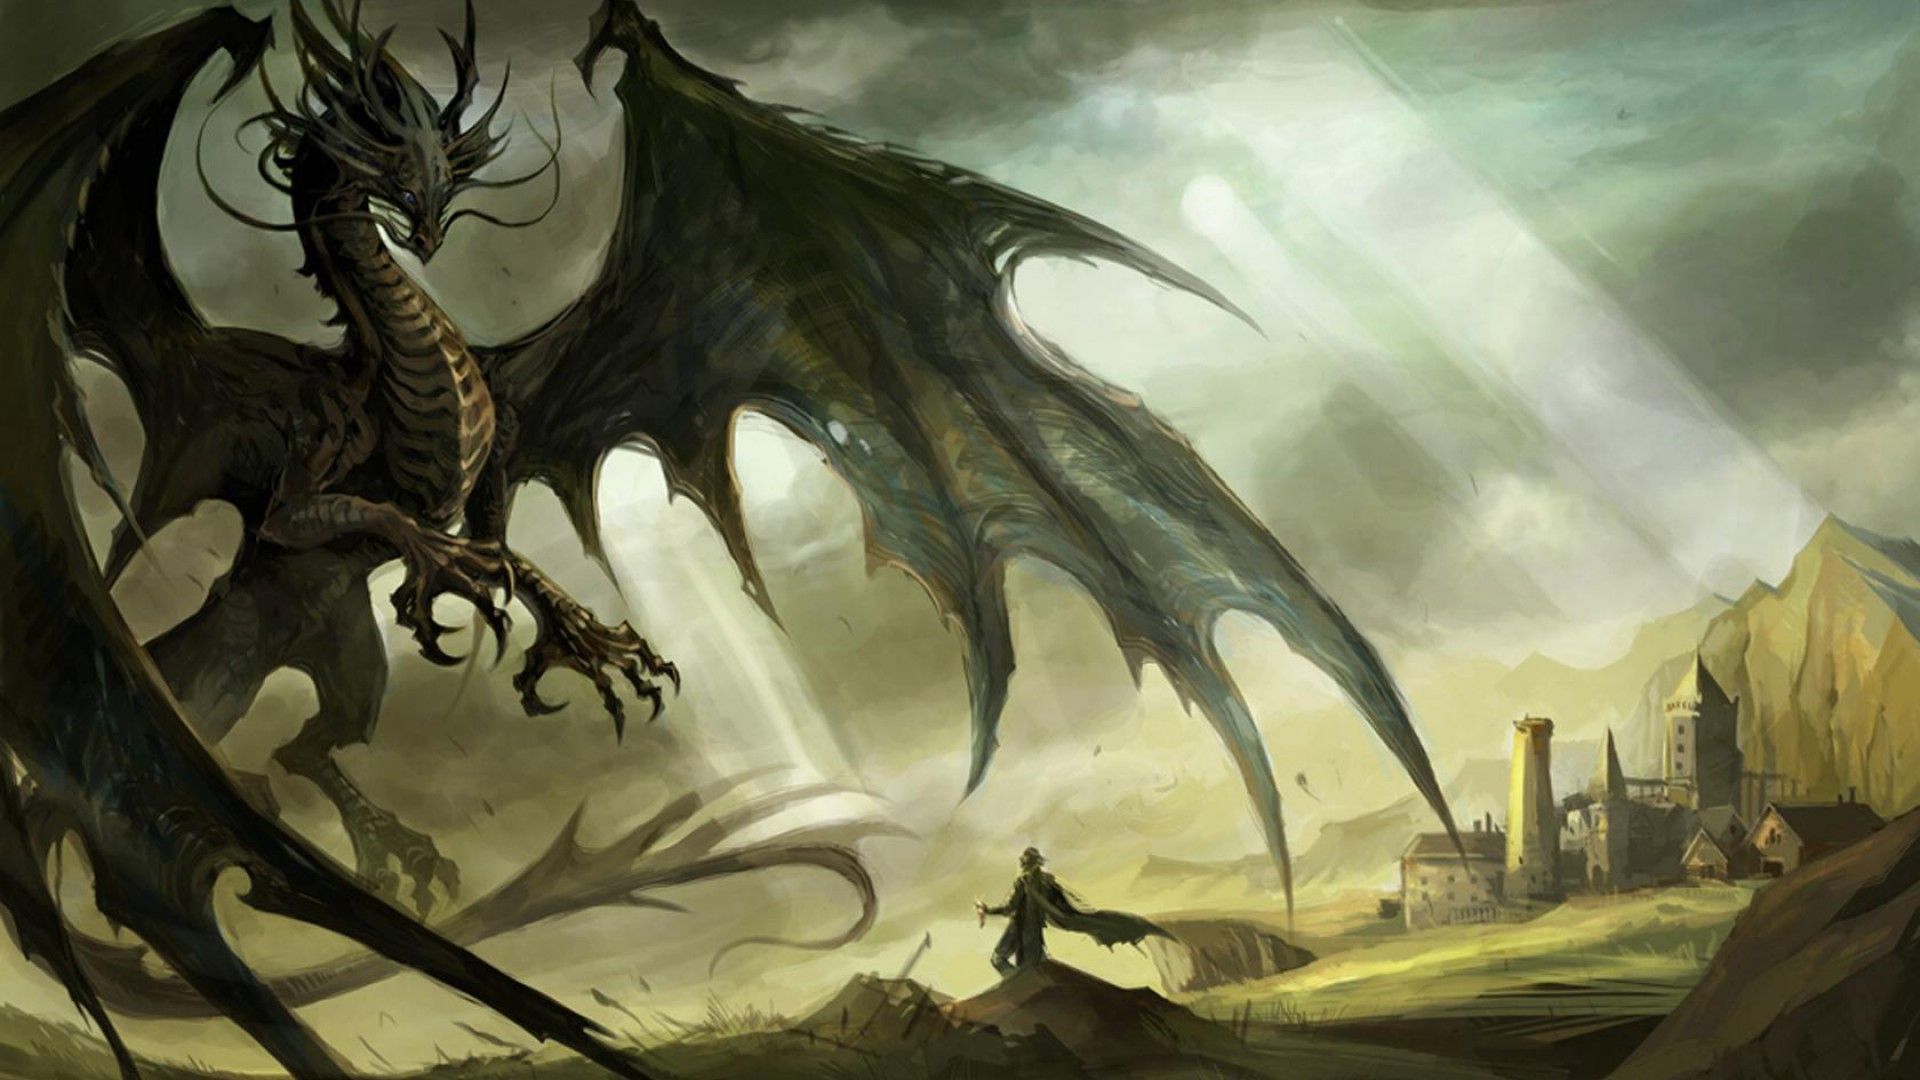 Dragons Wallpaper Free Download